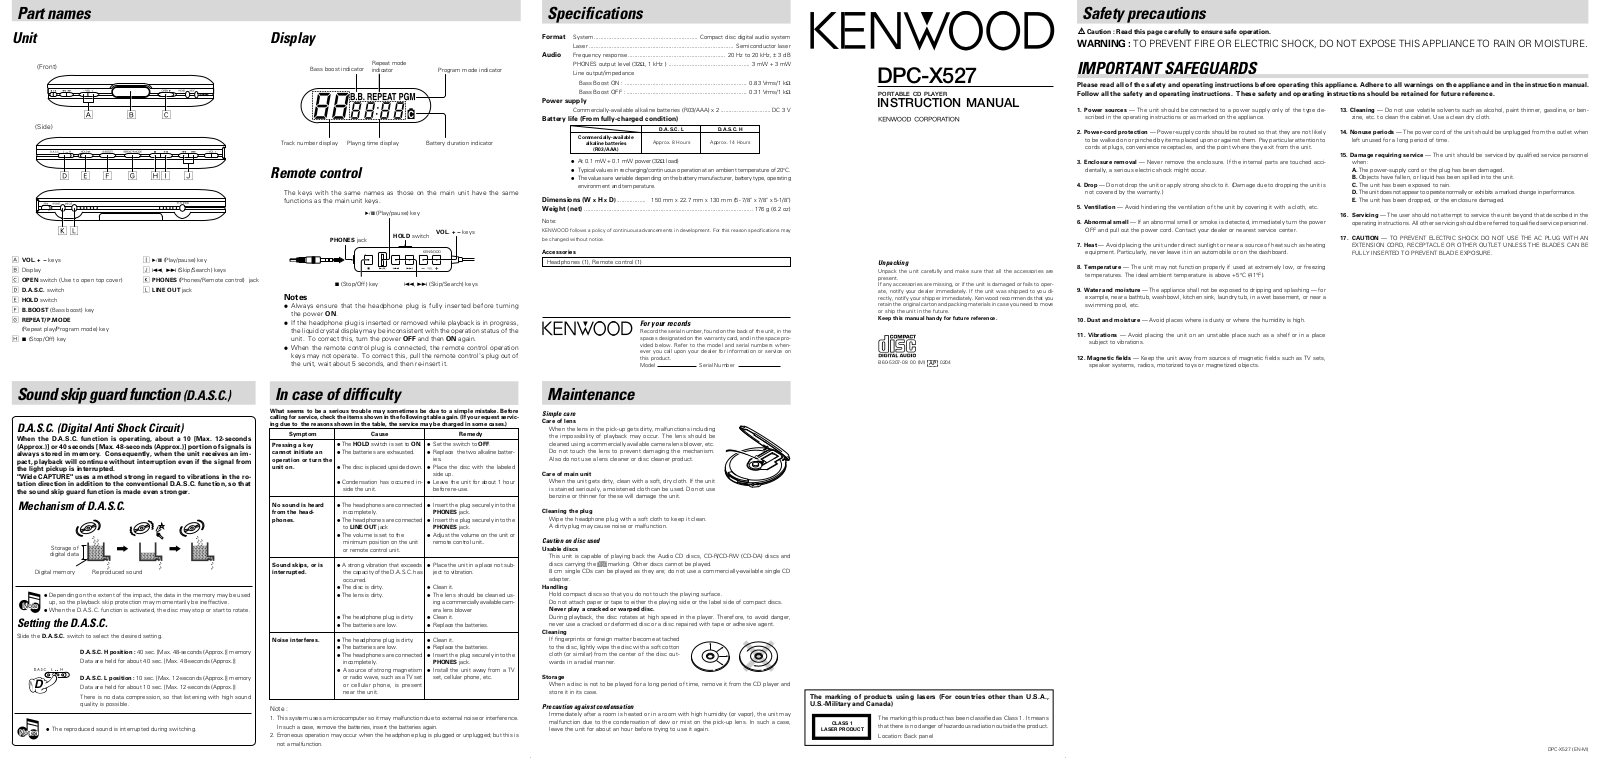 Kenwood DPC-X527 Manual